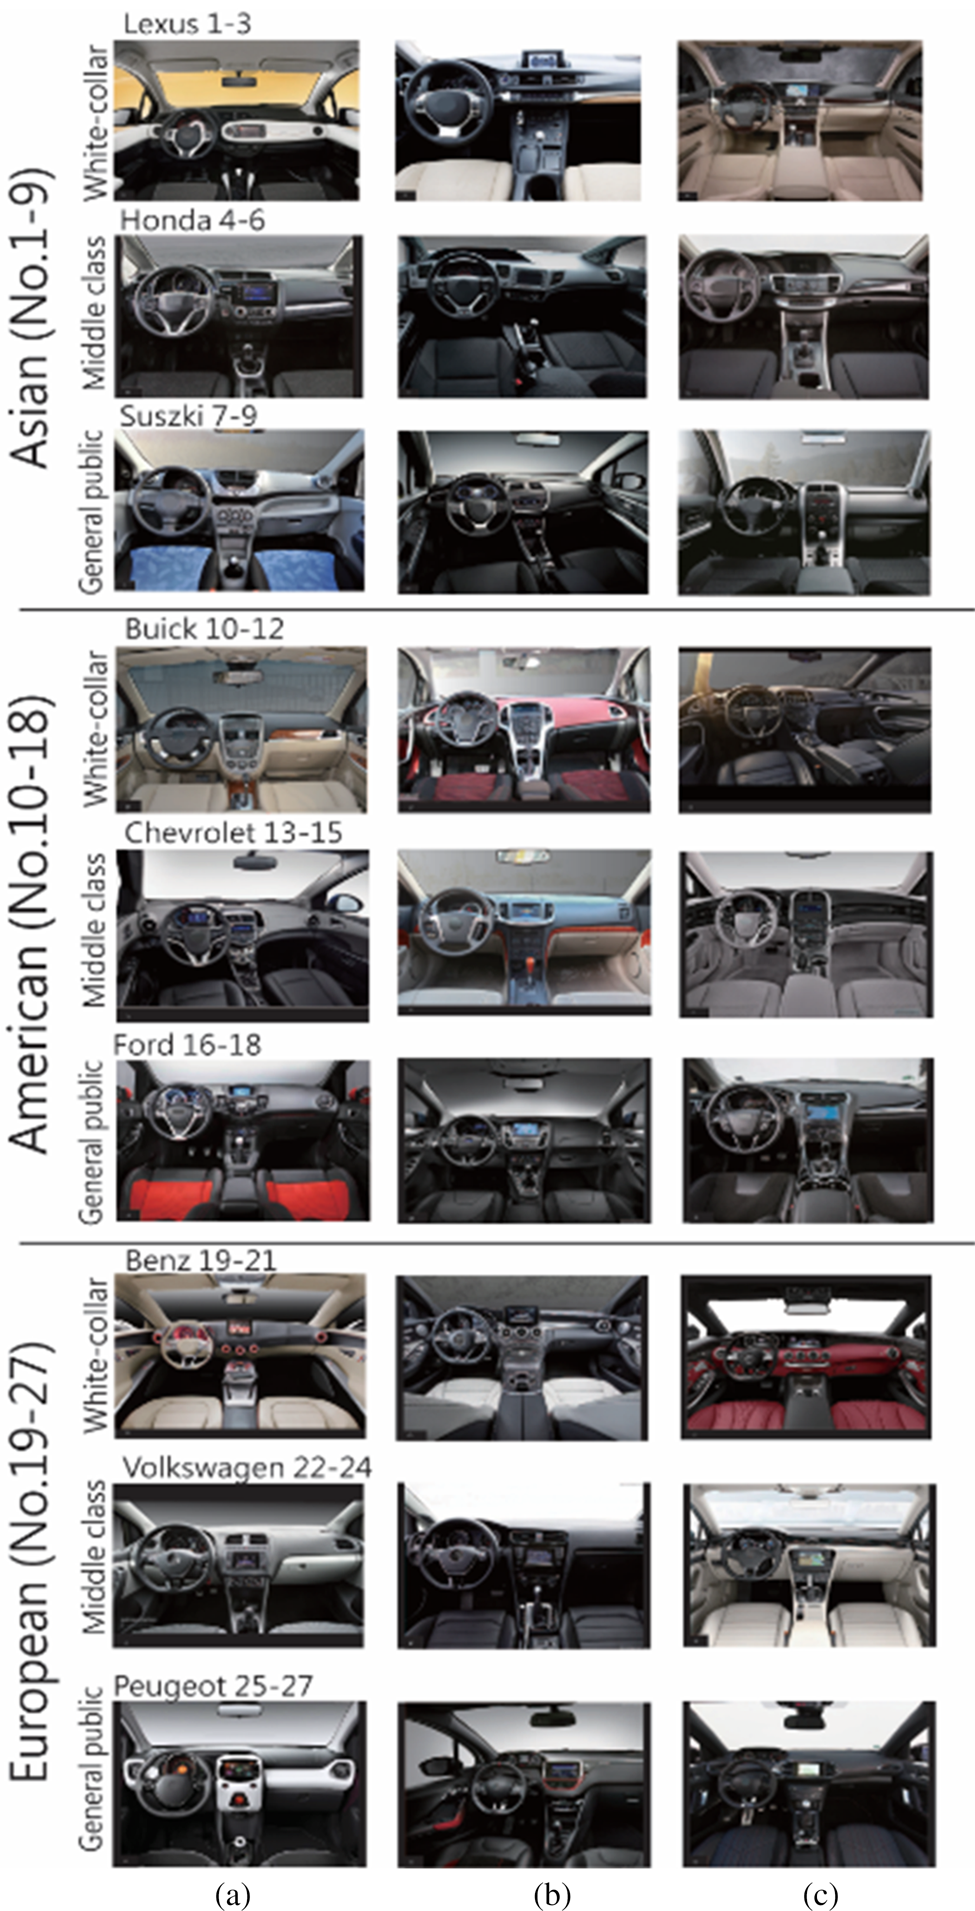 Investigating vehicle interior designs using models that evaluate